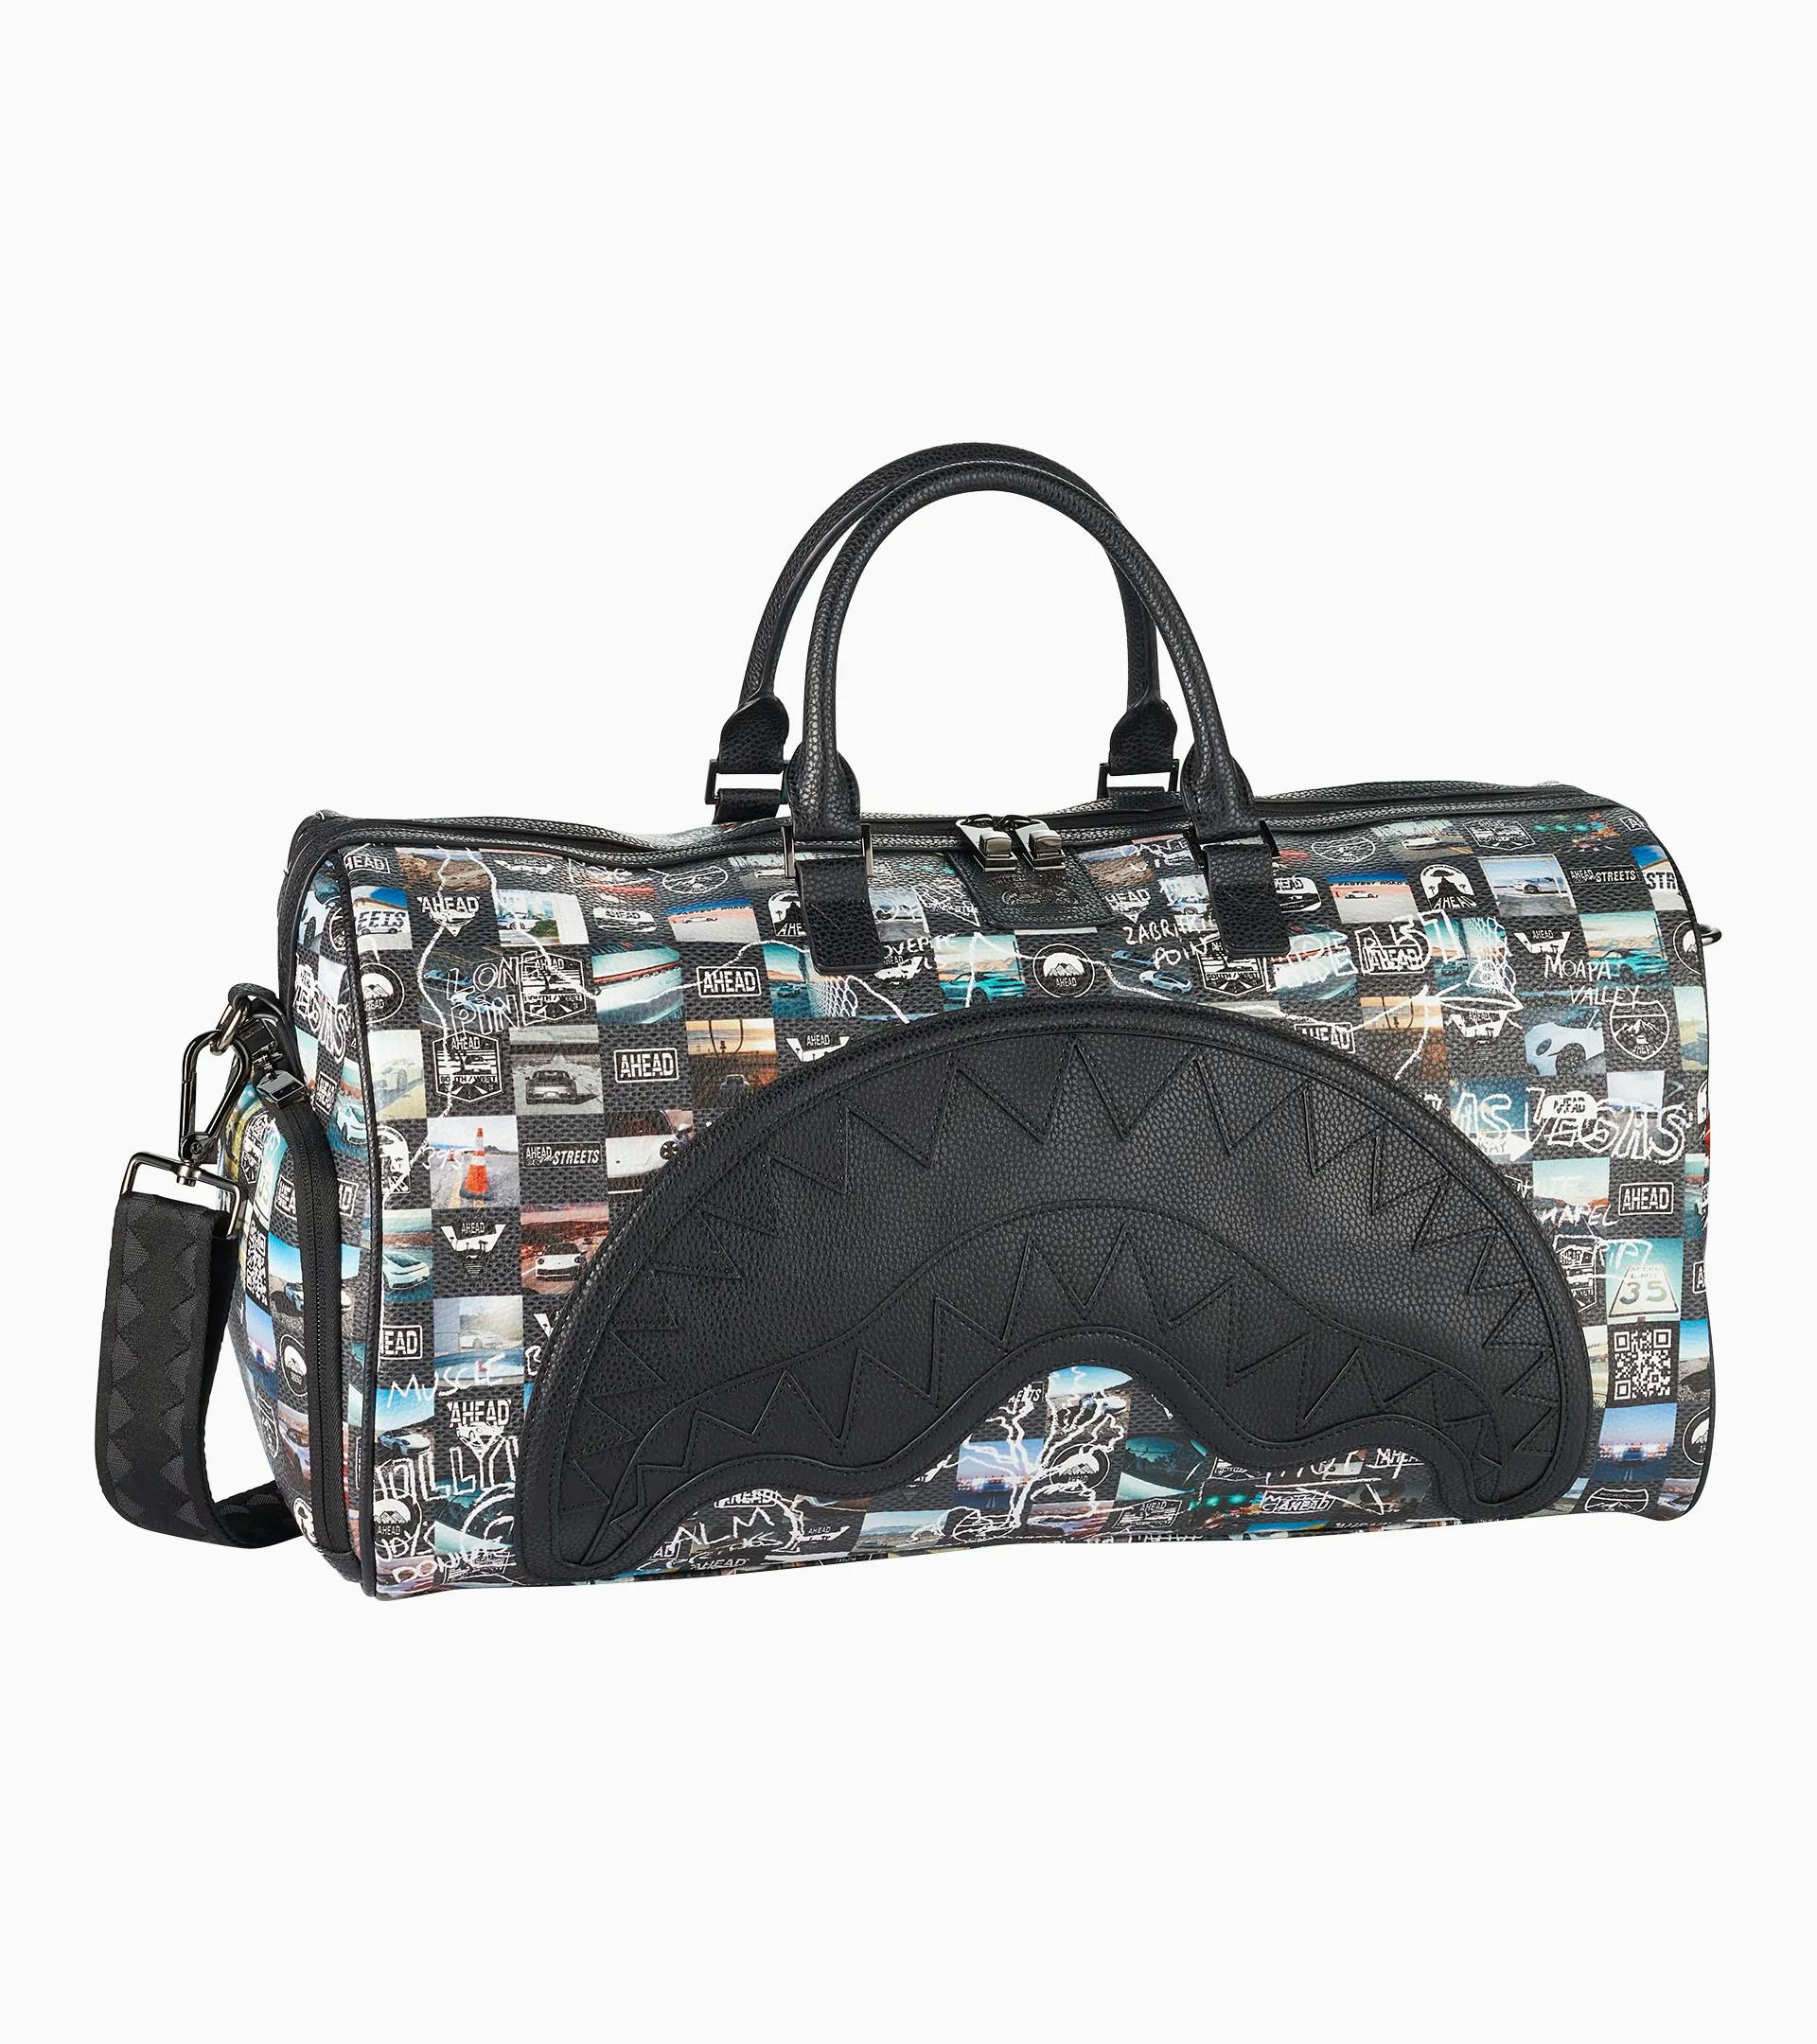 AHEAD duffle bag – Limited Edition